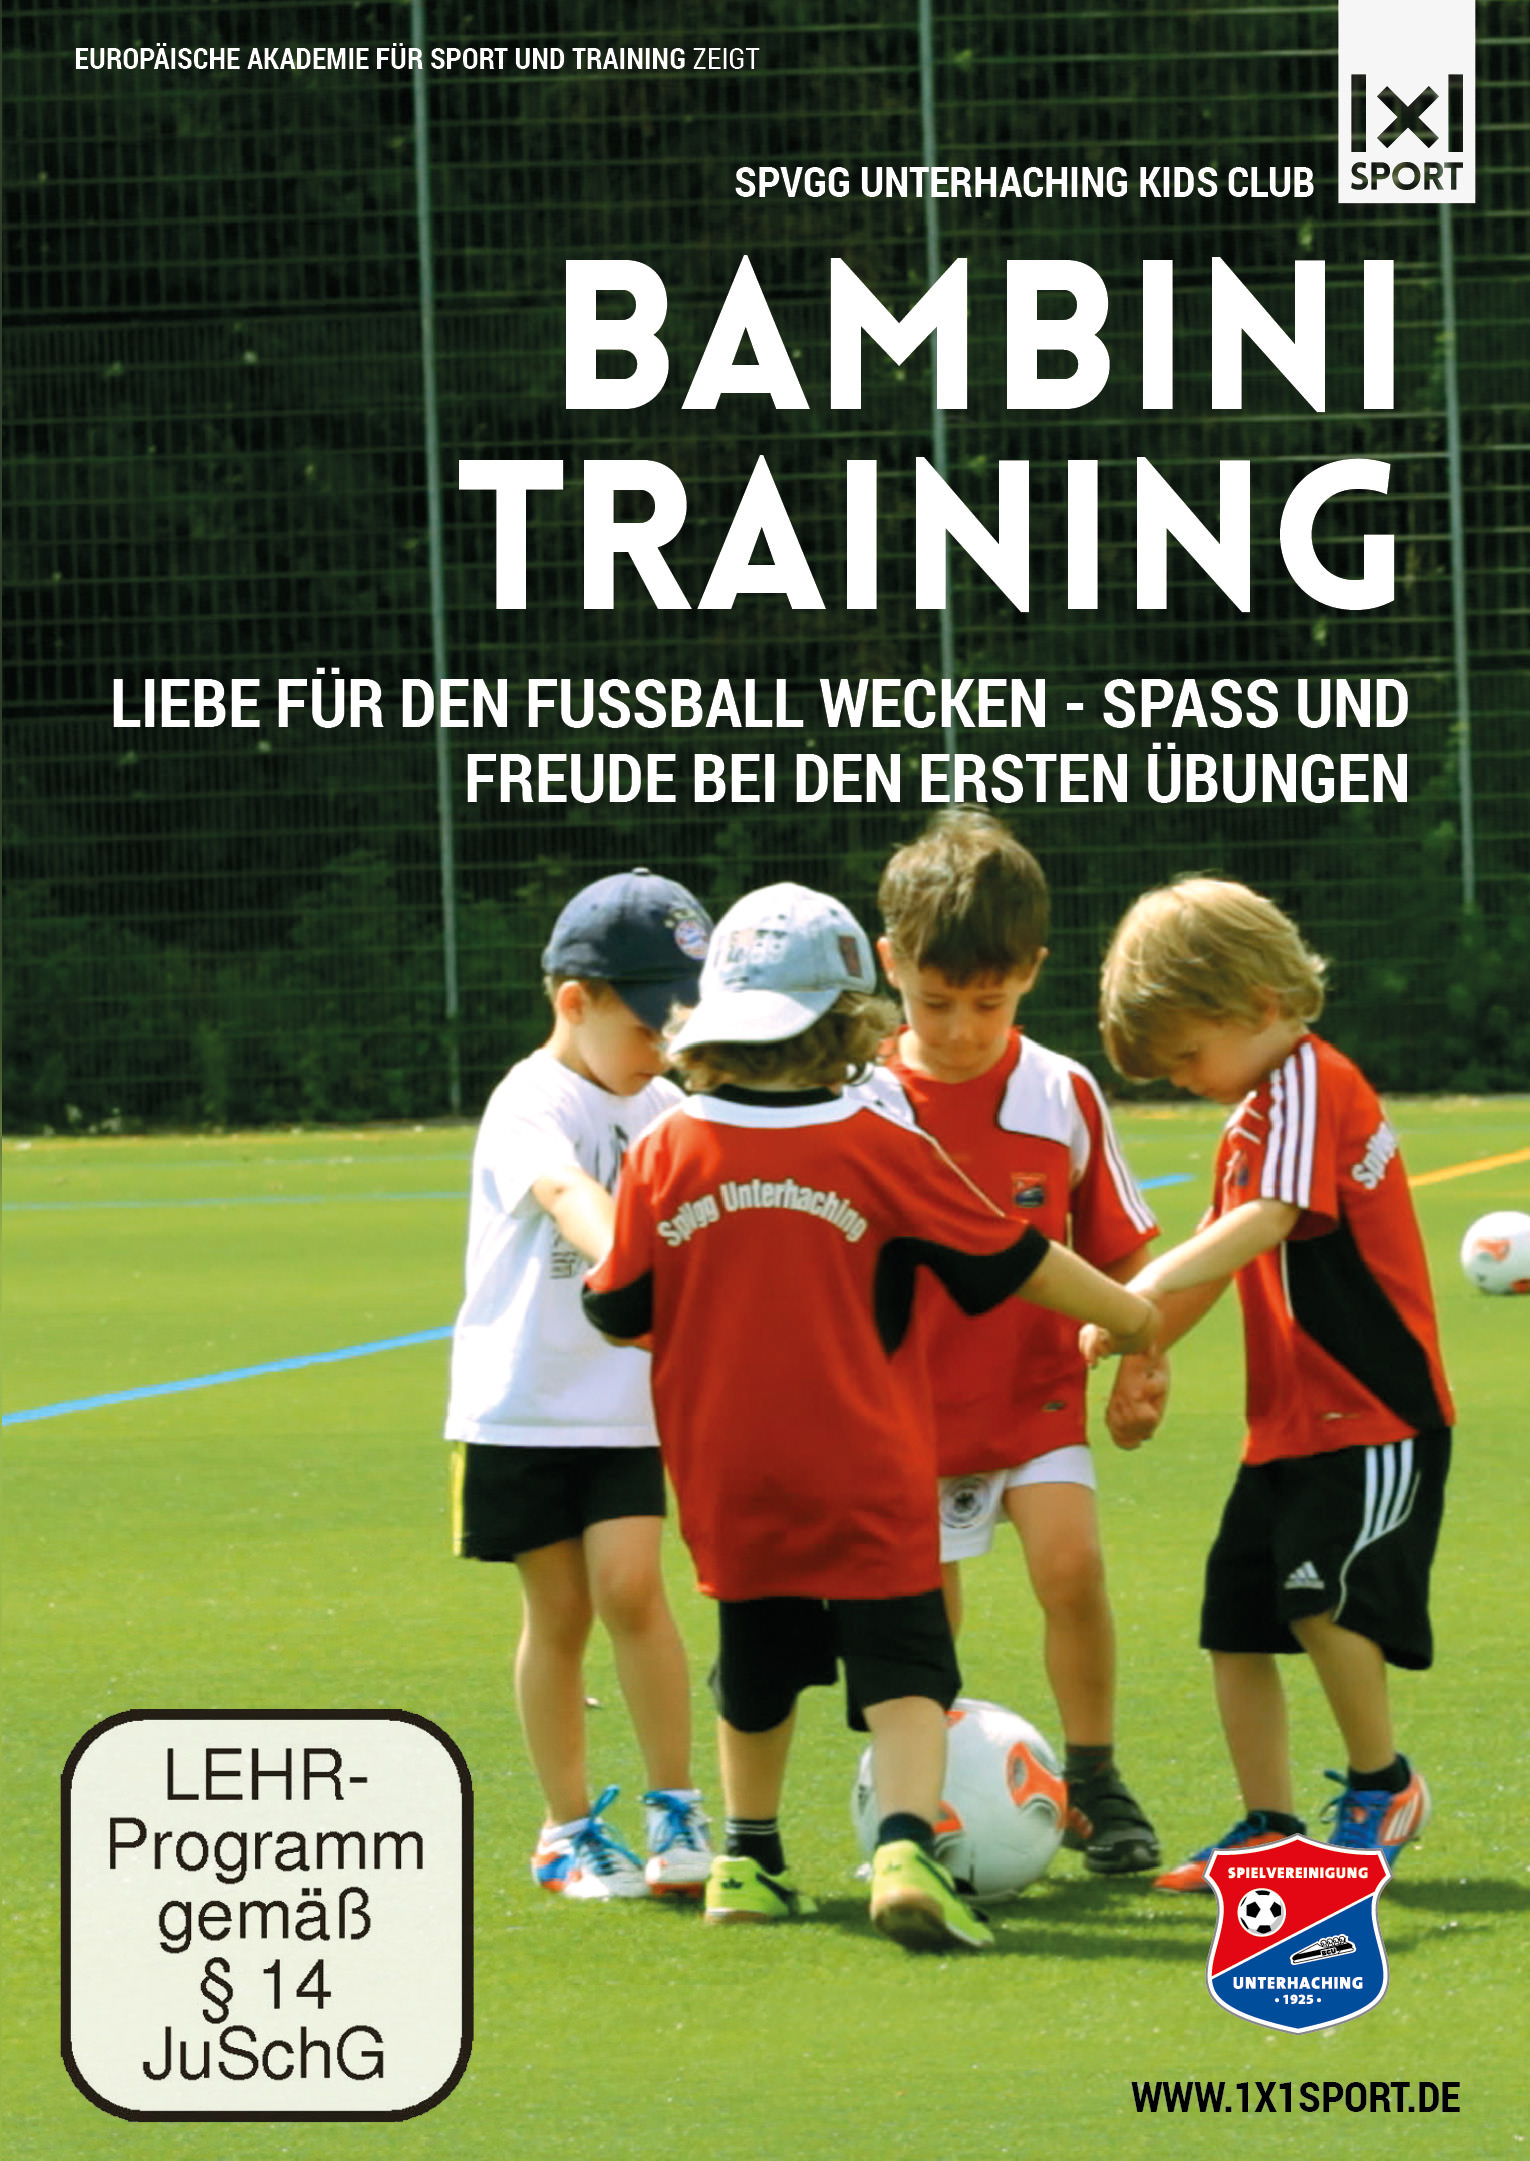 Bambini Fußballtraining - easy2coach - Fußballsoftware und Fußballtraining